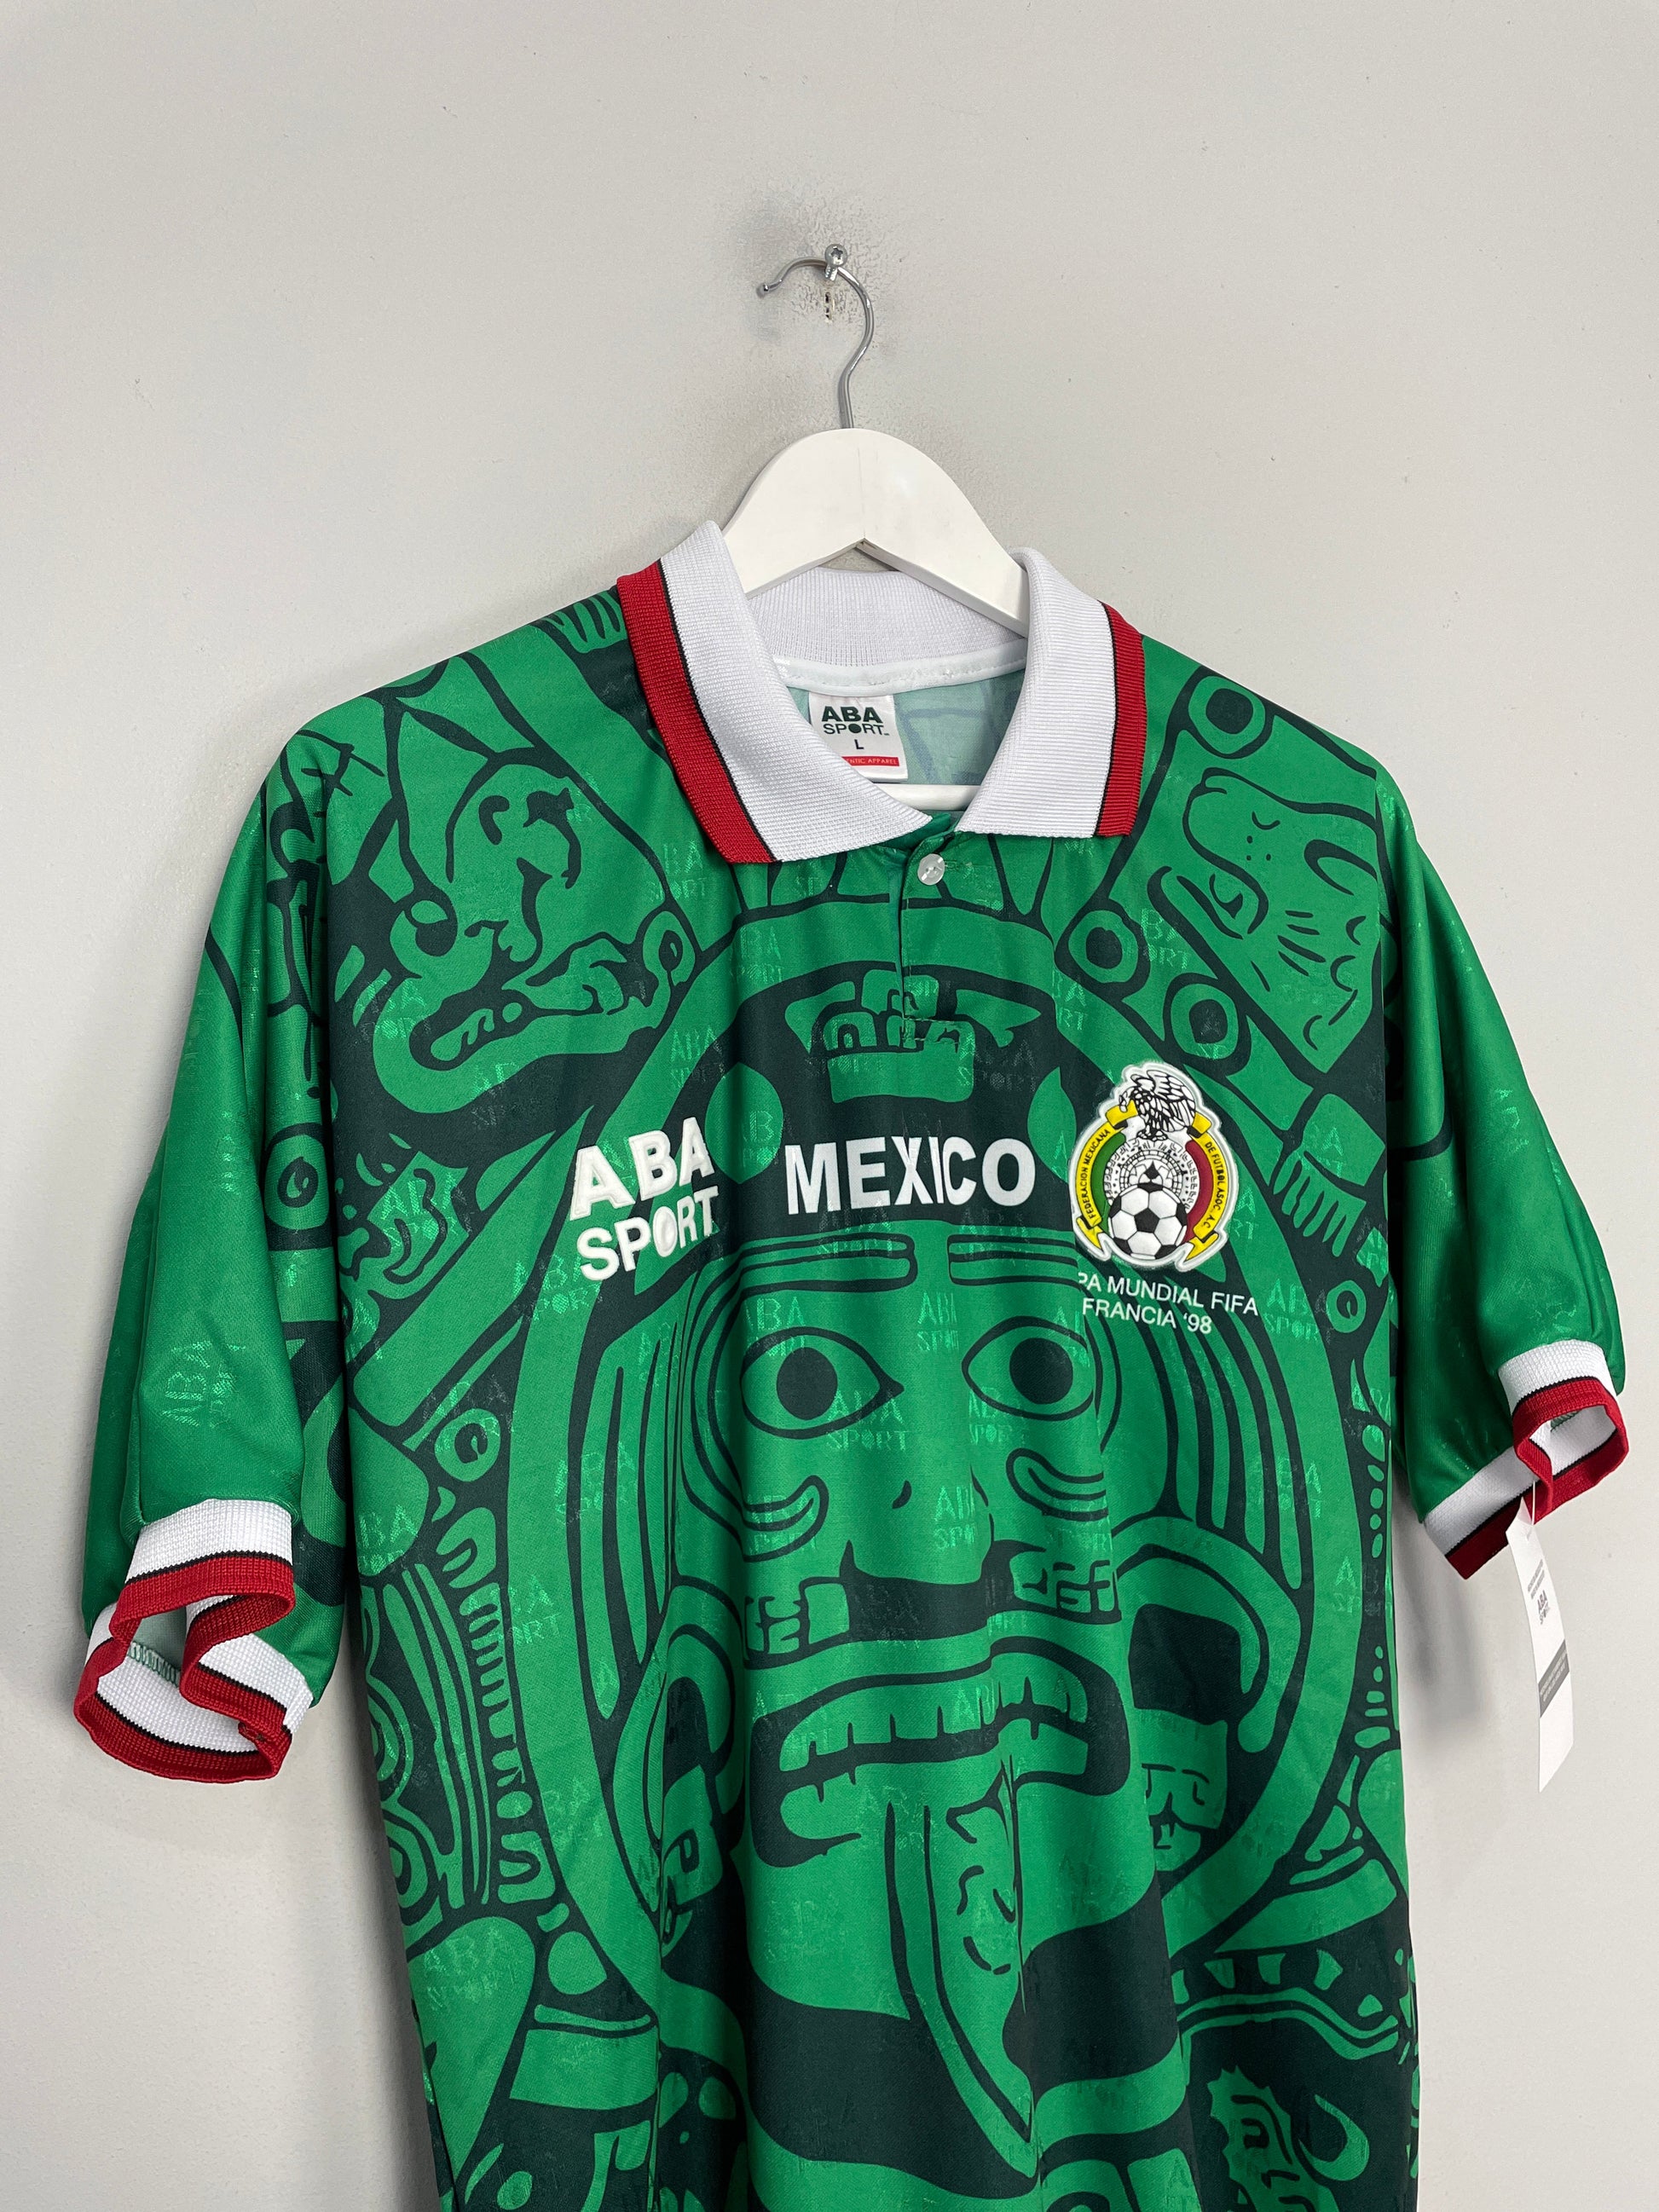 Cult Kits - Mexico 1998 reissue home shirt aba sport close up